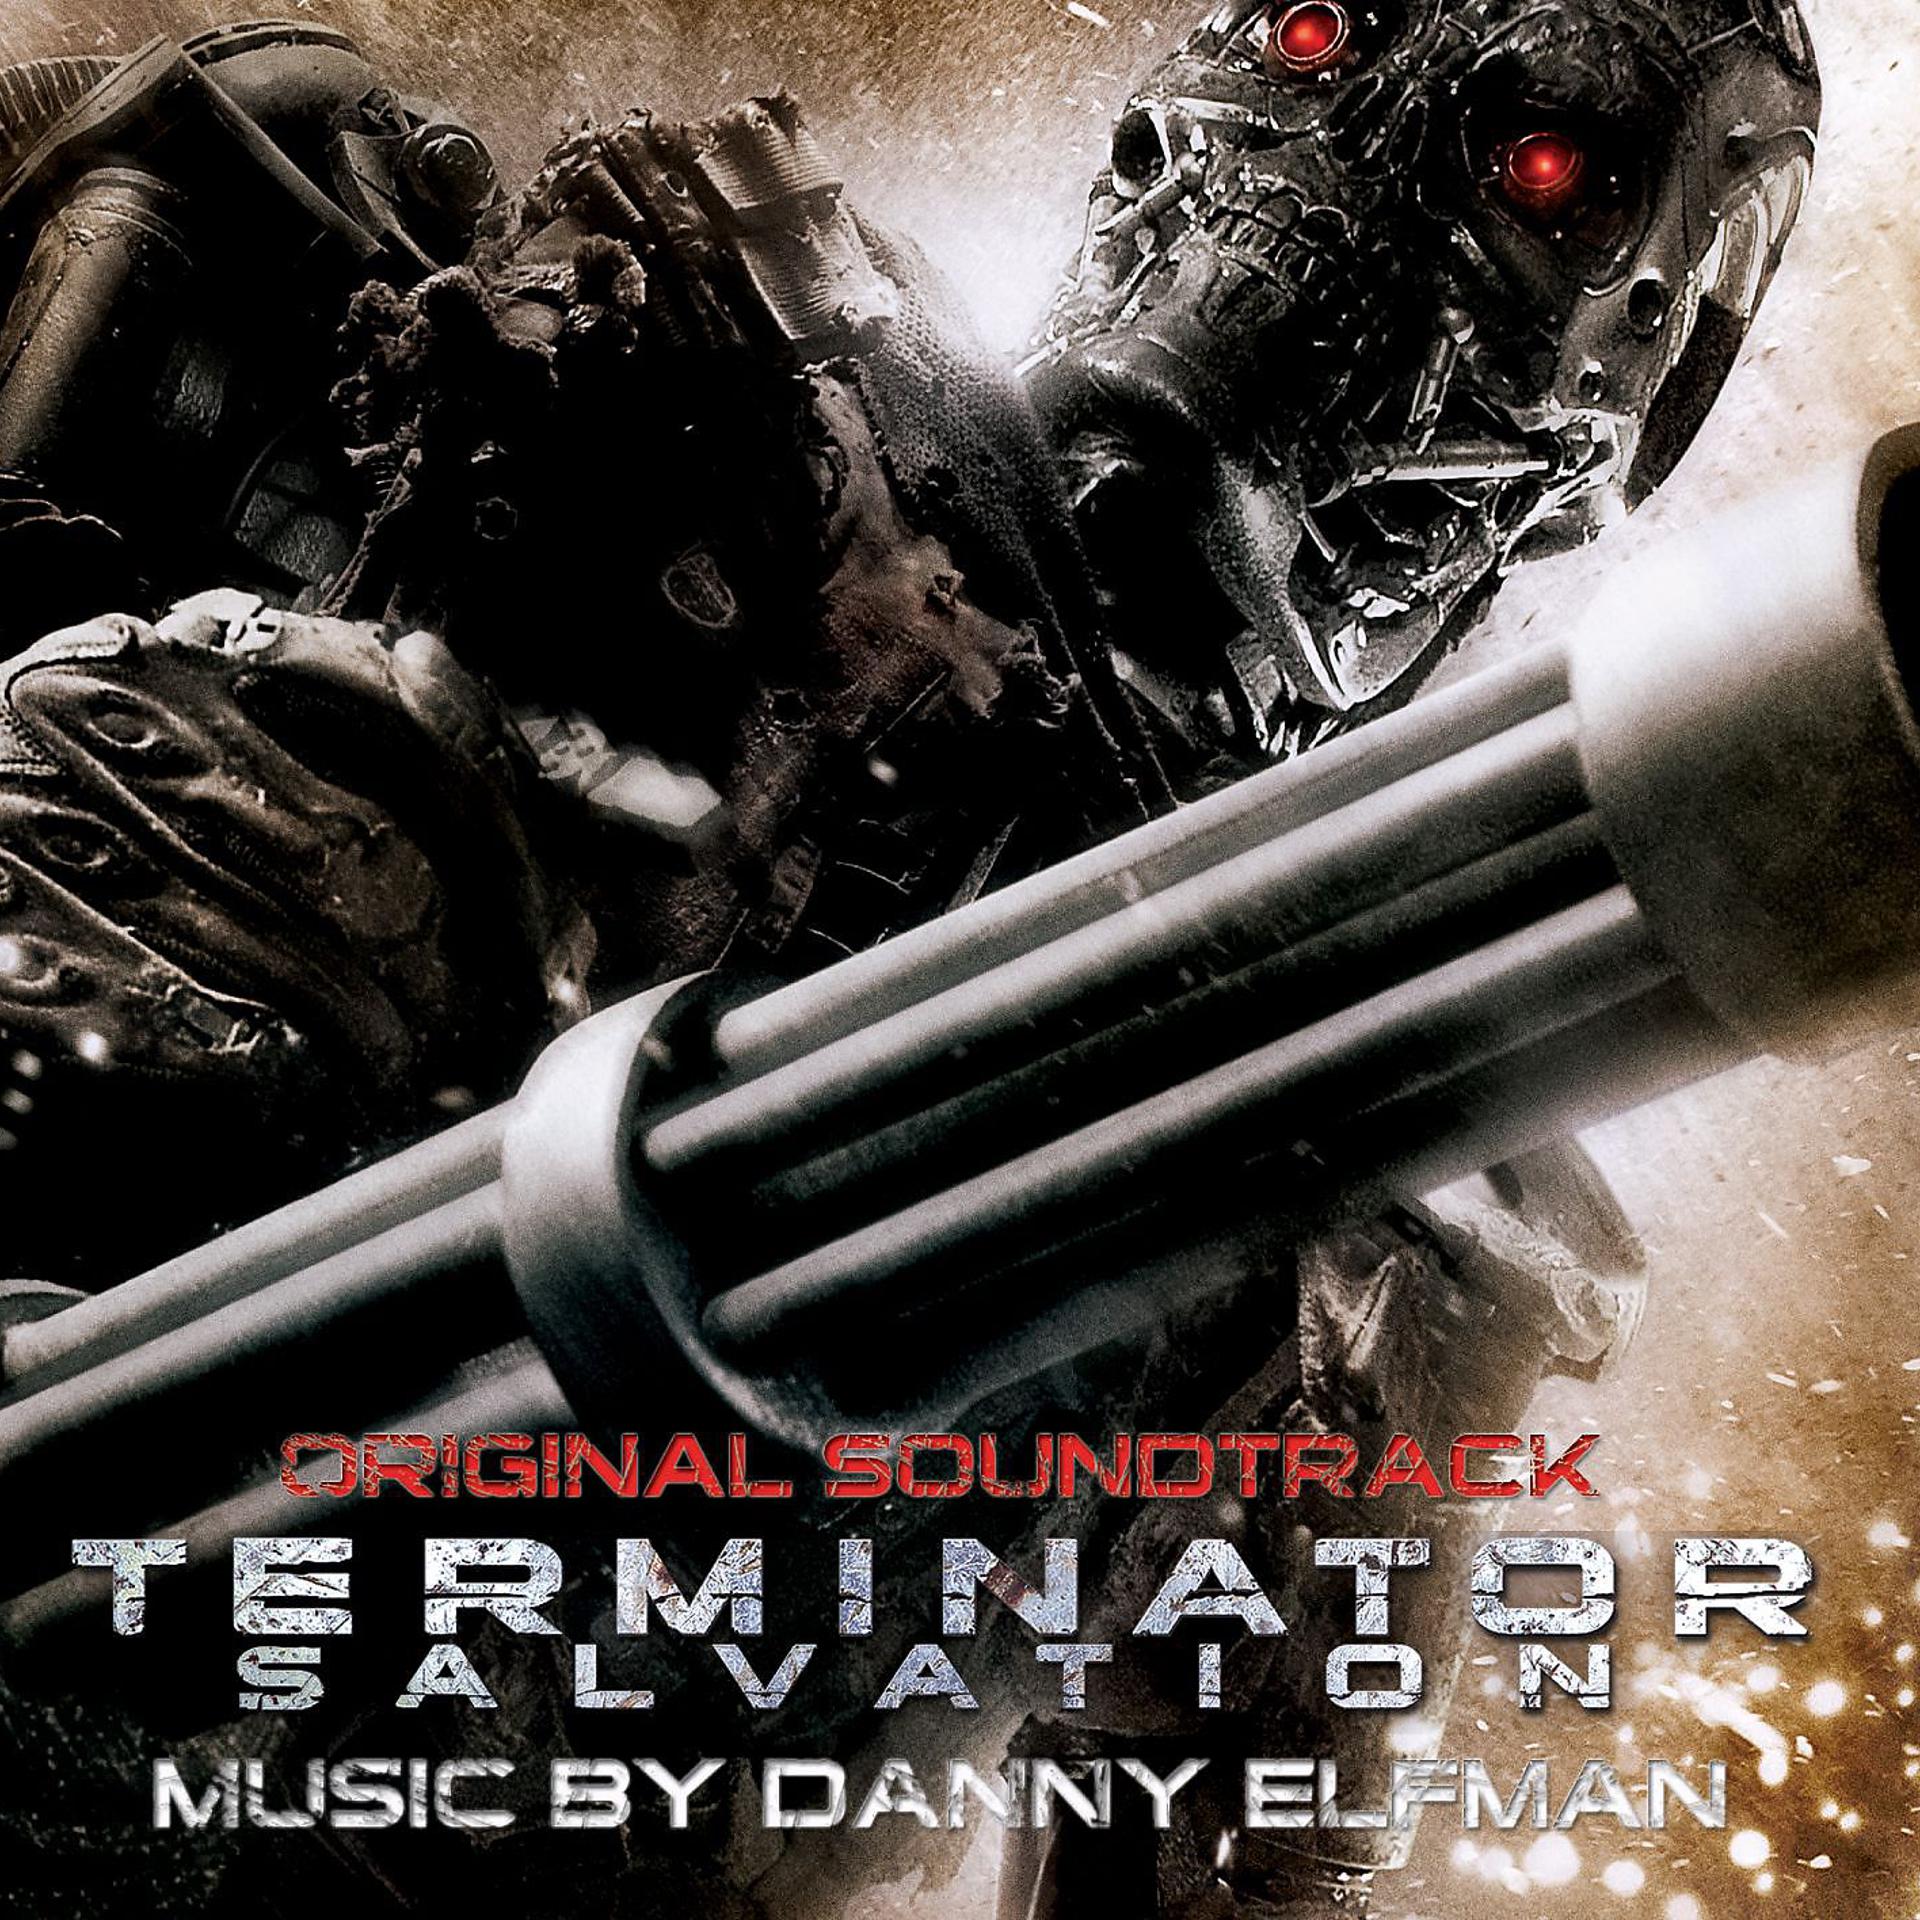 Ost terminator. Обложка Terminator Salvation 2009. Terminator Salvation (игра) обложка. Терминатор да придёт Спаситель игра. Terminator Salvation 2009 игра.